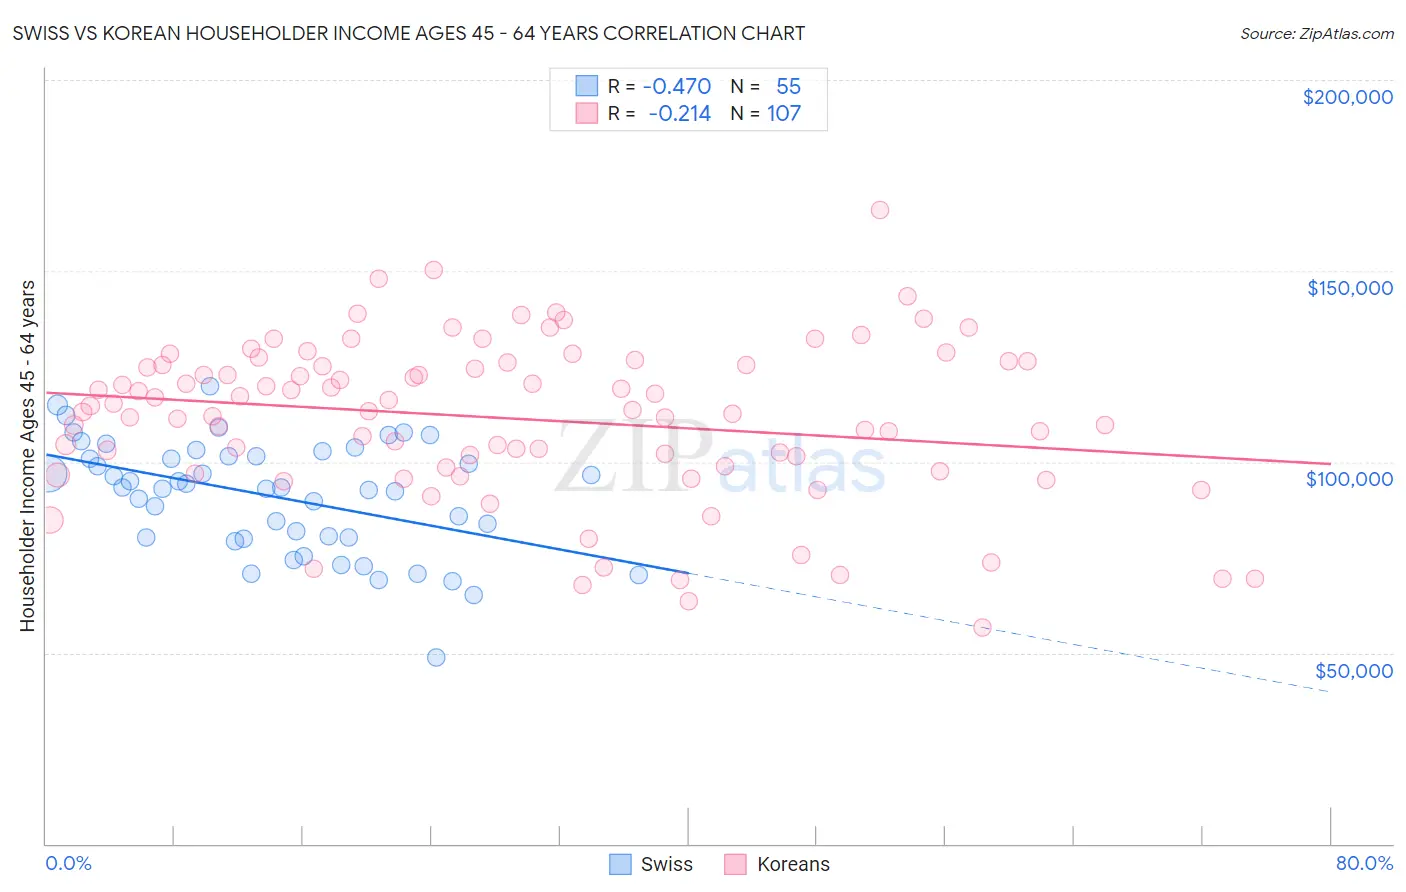 Swiss vs Korean Householder Income Ages 45 - 64 years